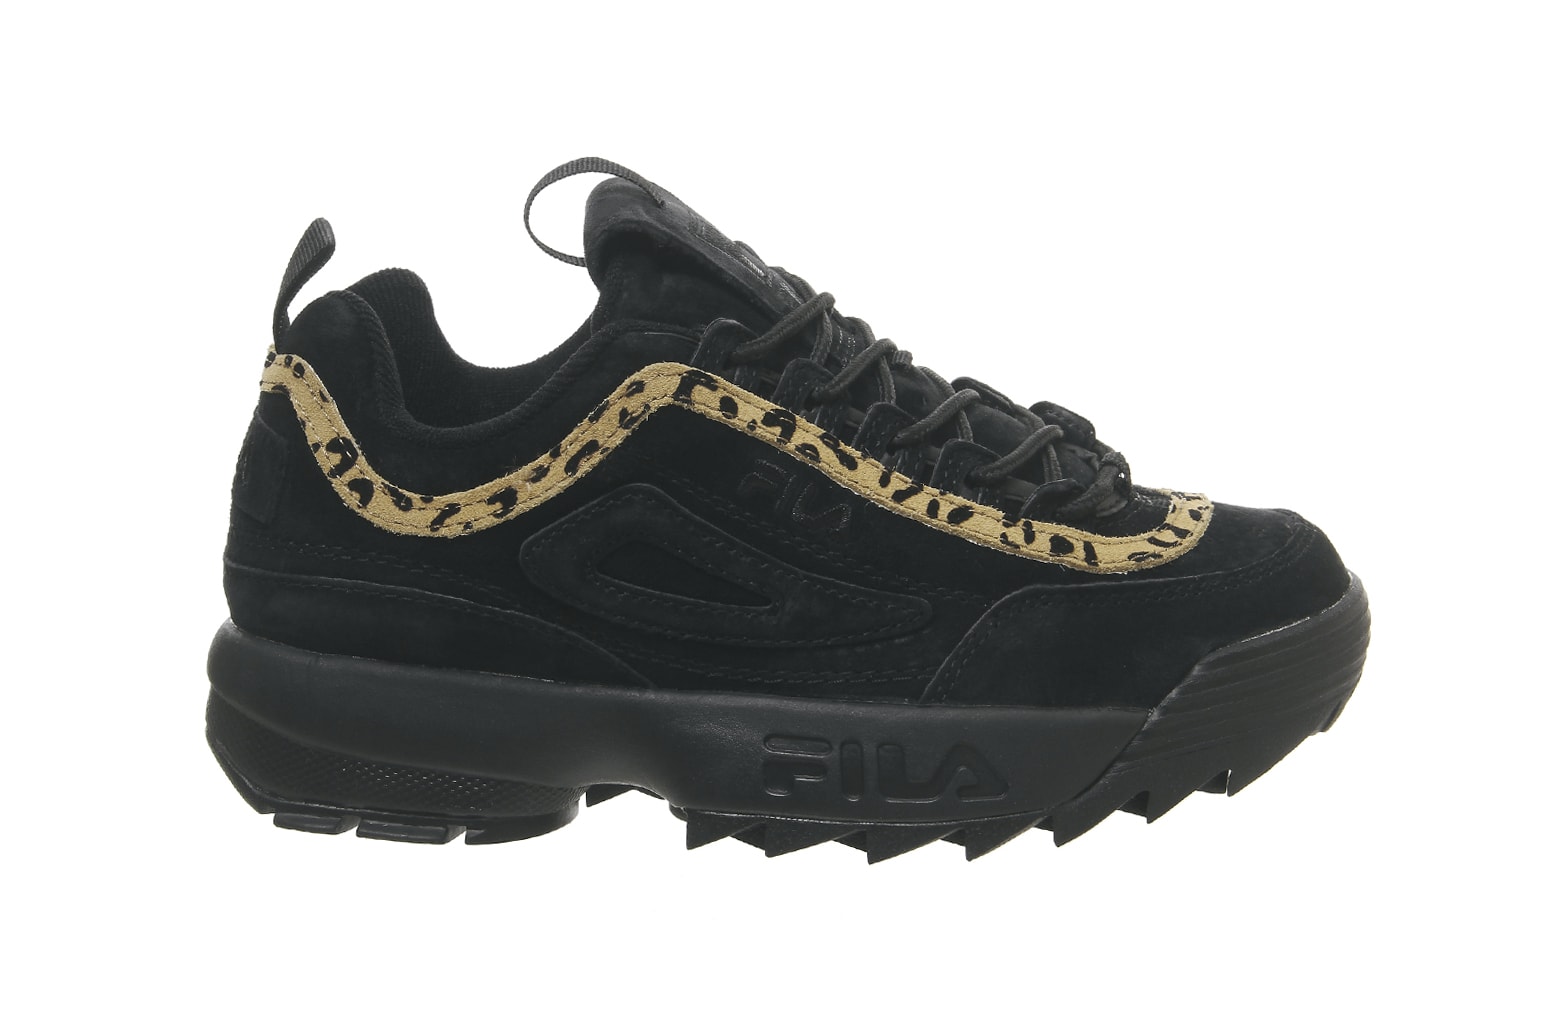 FILA Disruptor 2 Leopard Print in Black/White Sneaker Shoe Chunky Silhouette